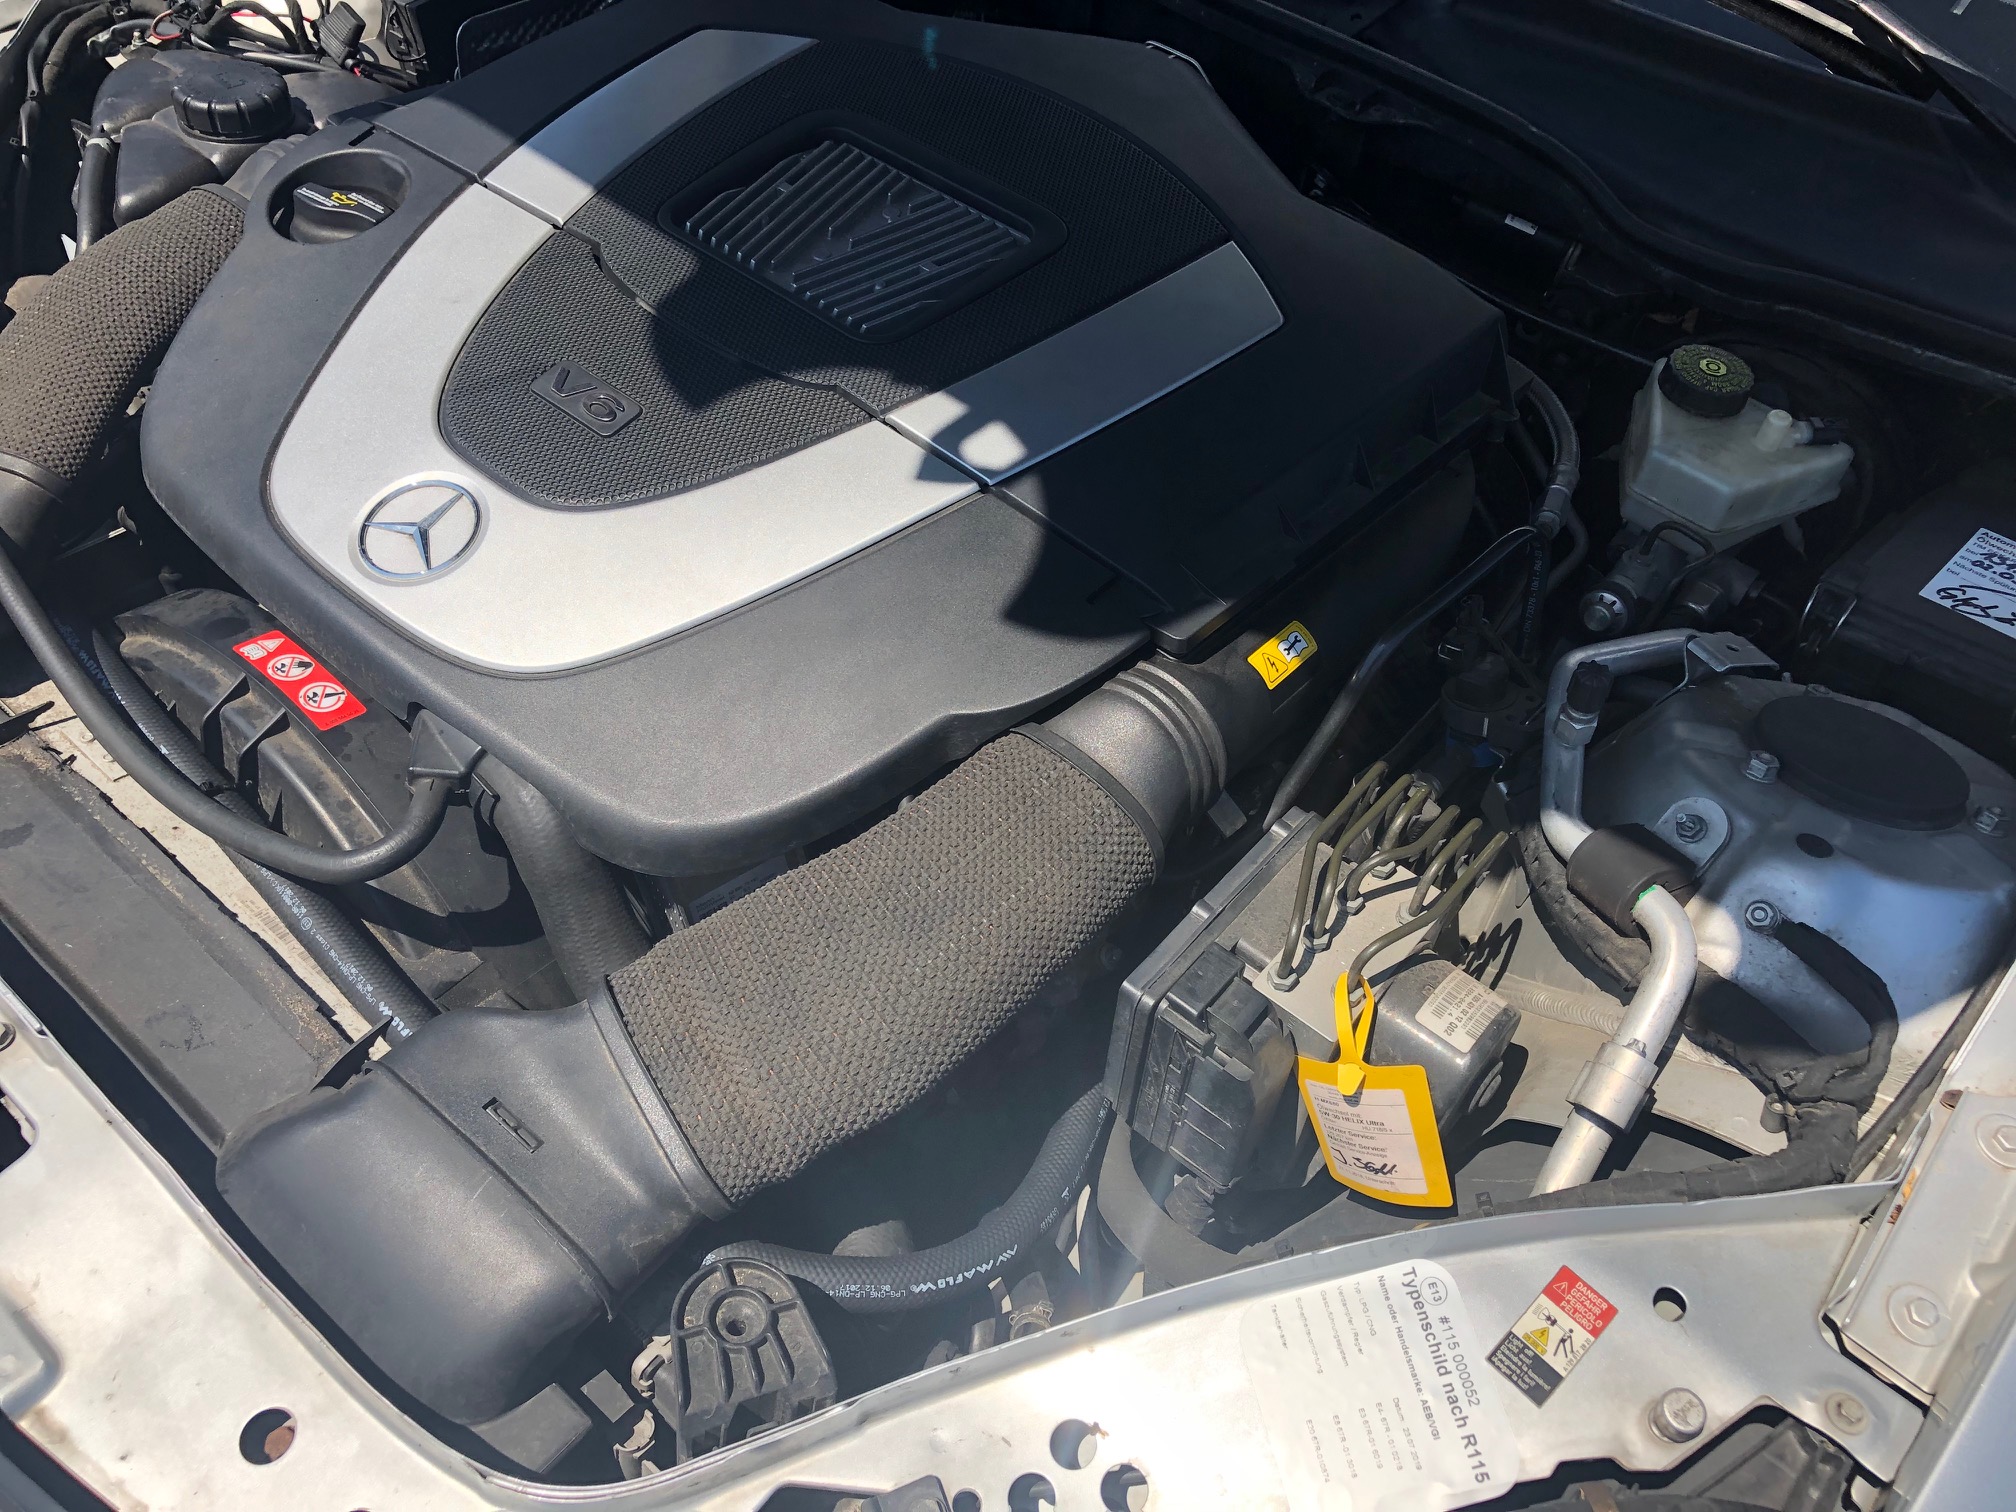 Frontgas-Autogas-Umruestung-LPG-Einbau-Frontgas-OBD-Premium-Mercedes-Benz-SLK-350-R171-3,5L-200Kw-Motor2